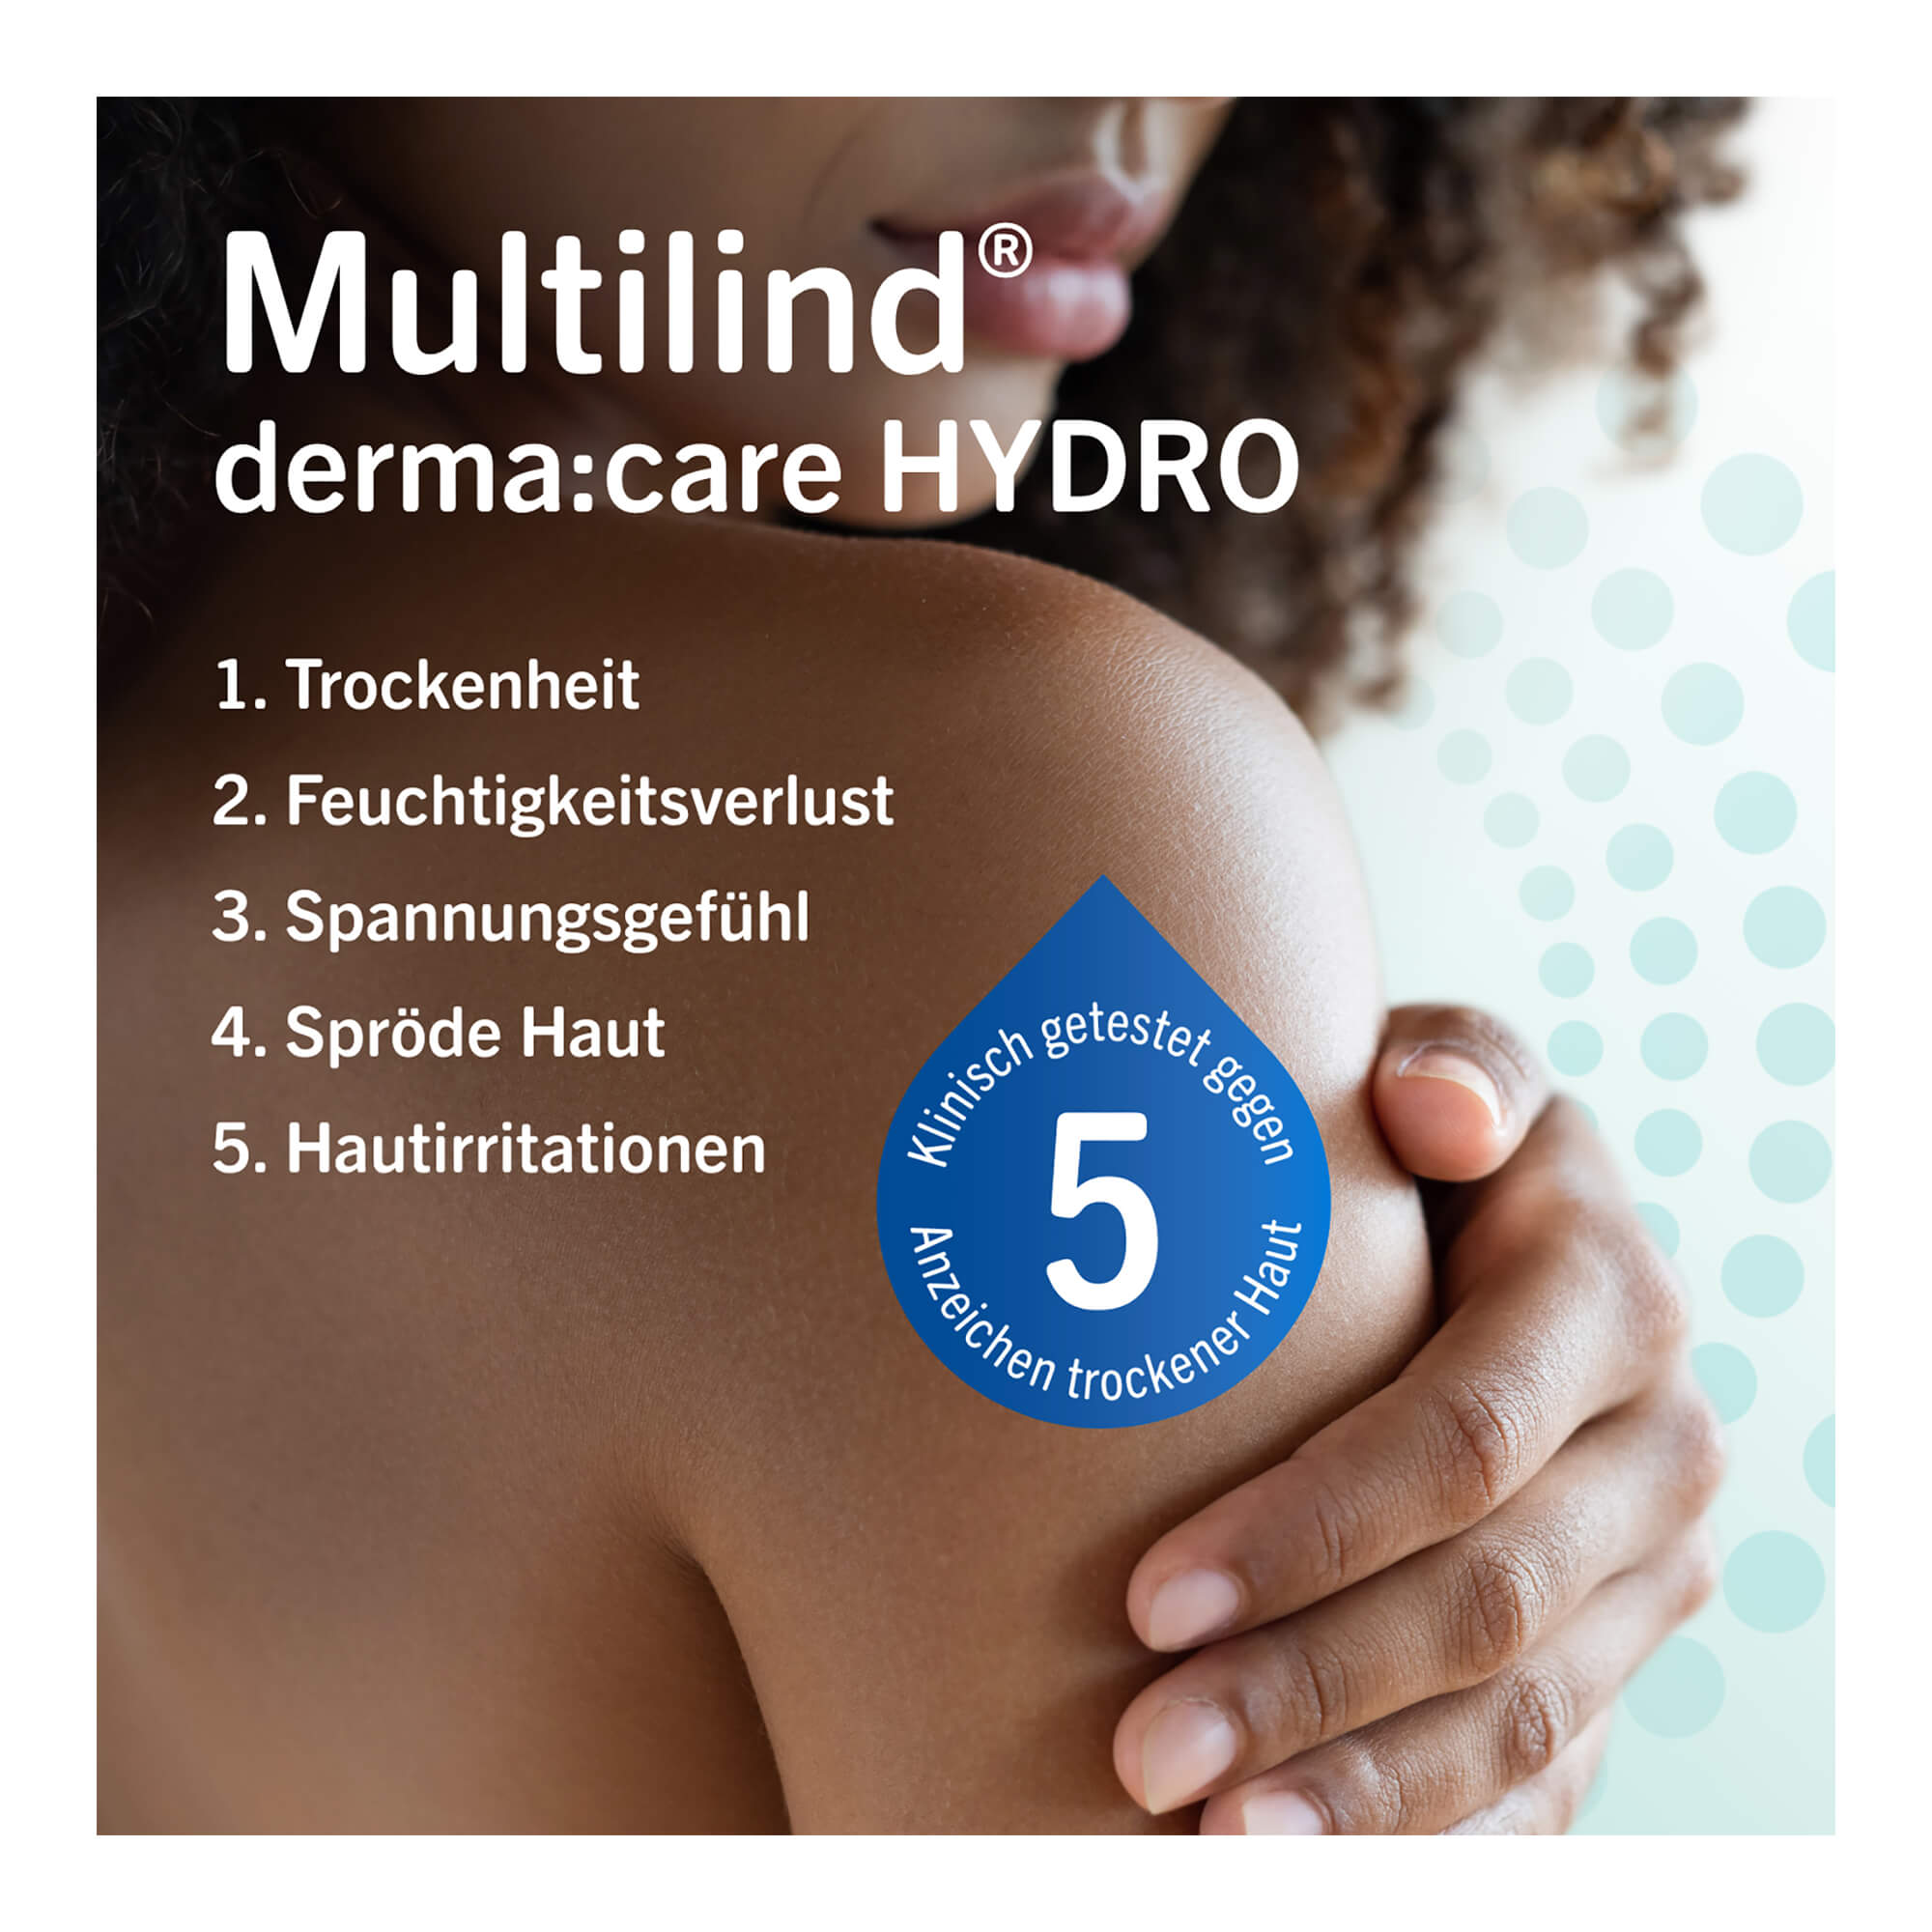 Multilind derma:care Hydro Intensiv Repair Creme Wirkung